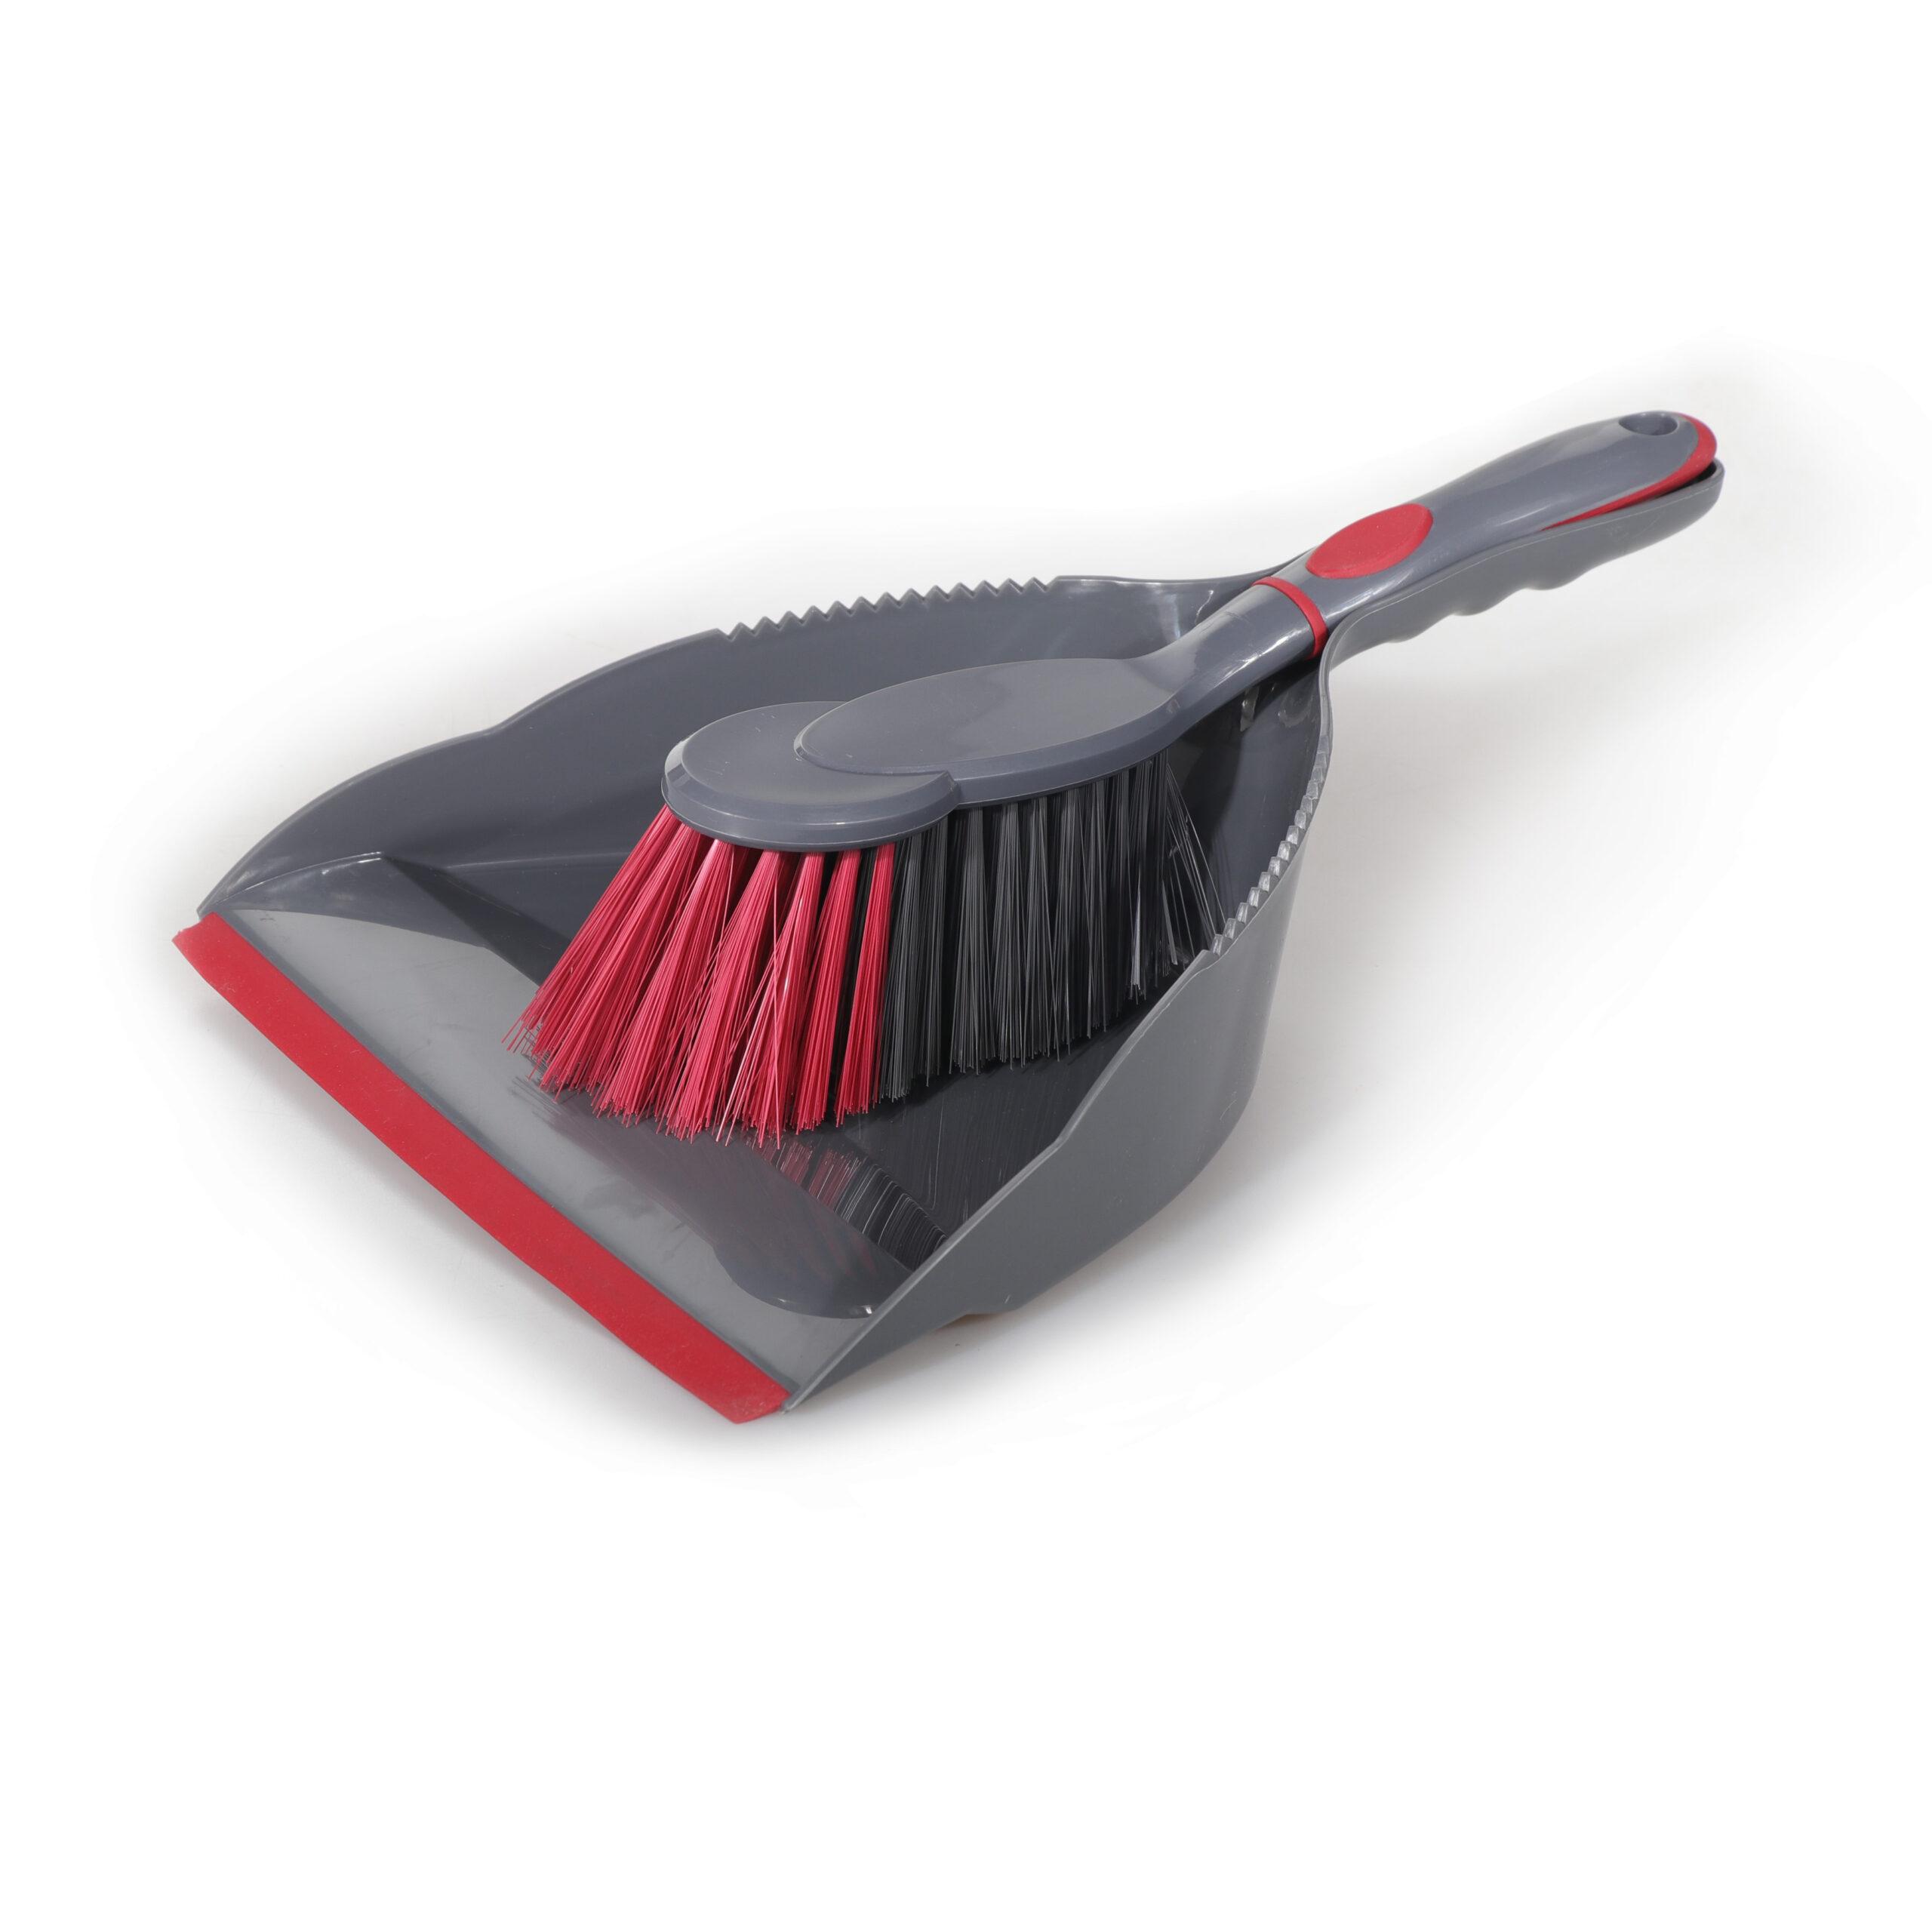 Delcasa Dust Pan & Brush Set - Hand Broom With Synthetic Stiff Bristles - Broom Set Having Frayed